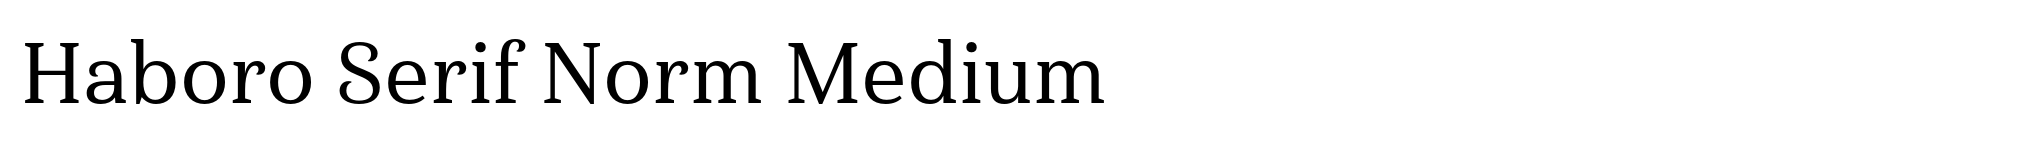 Haboro Serif Norm Medium image